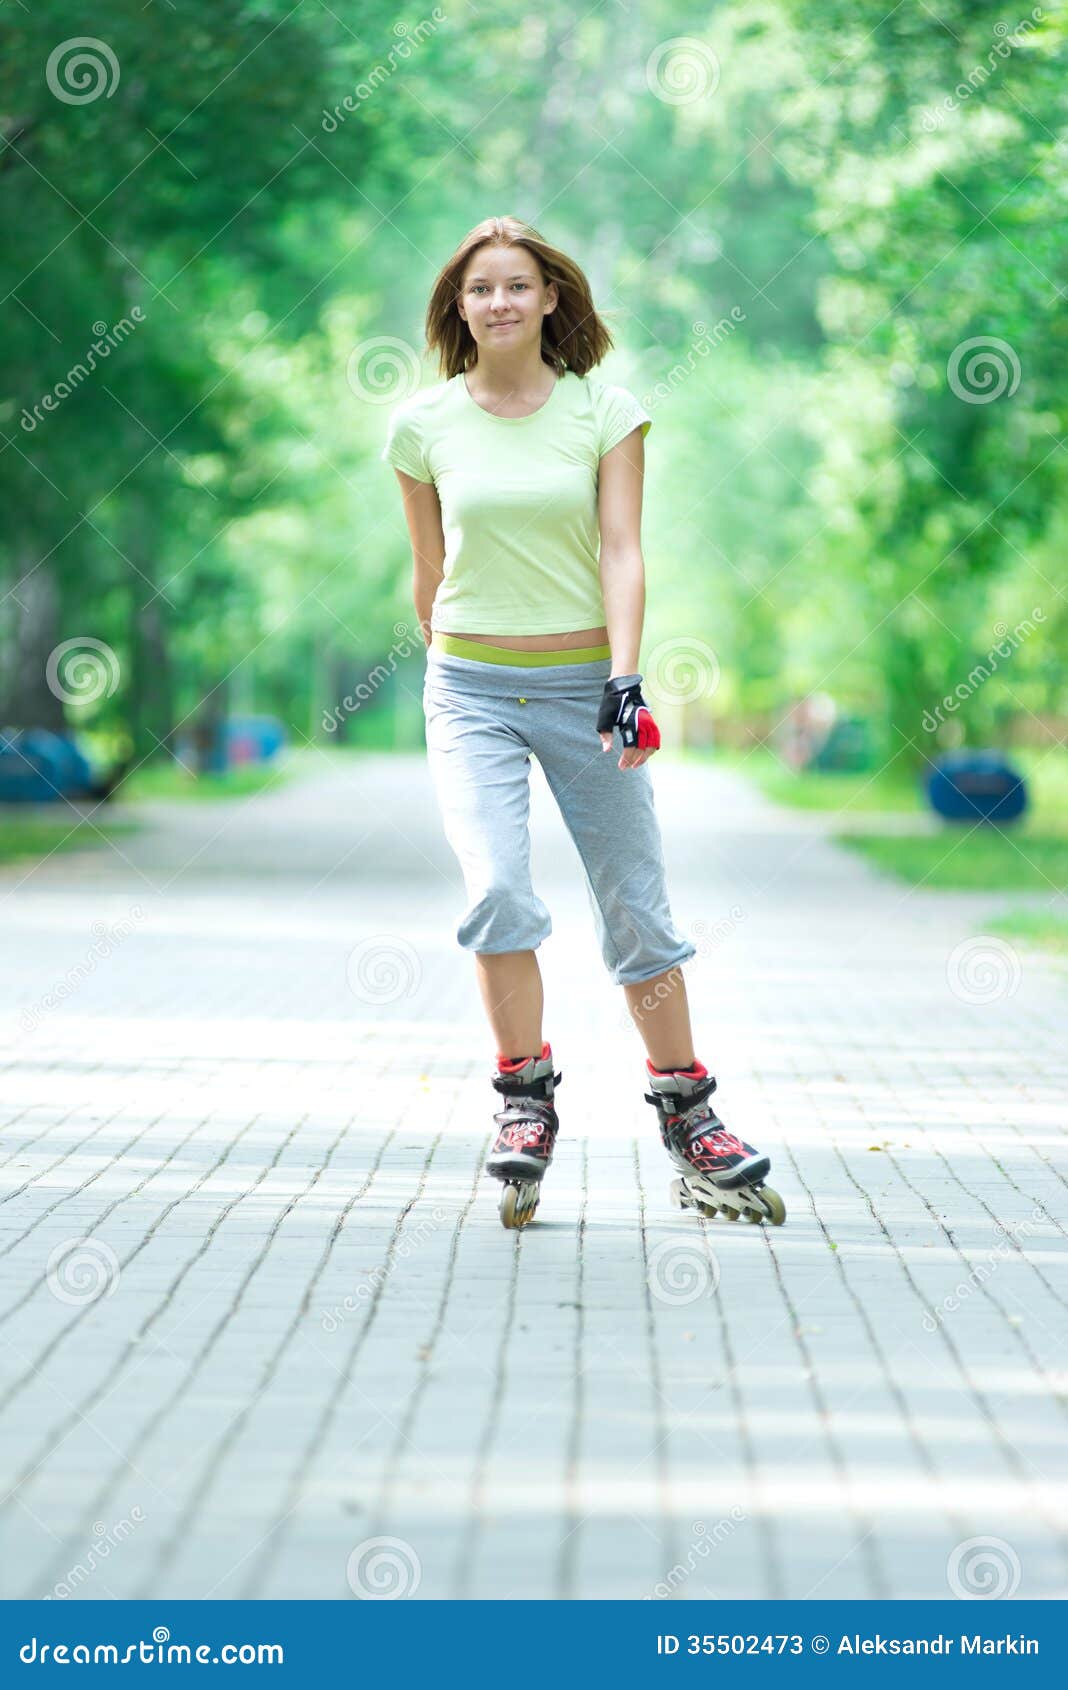 Roller Skating Sporty Girl In Park Rollerblading On Inline Skate Stock